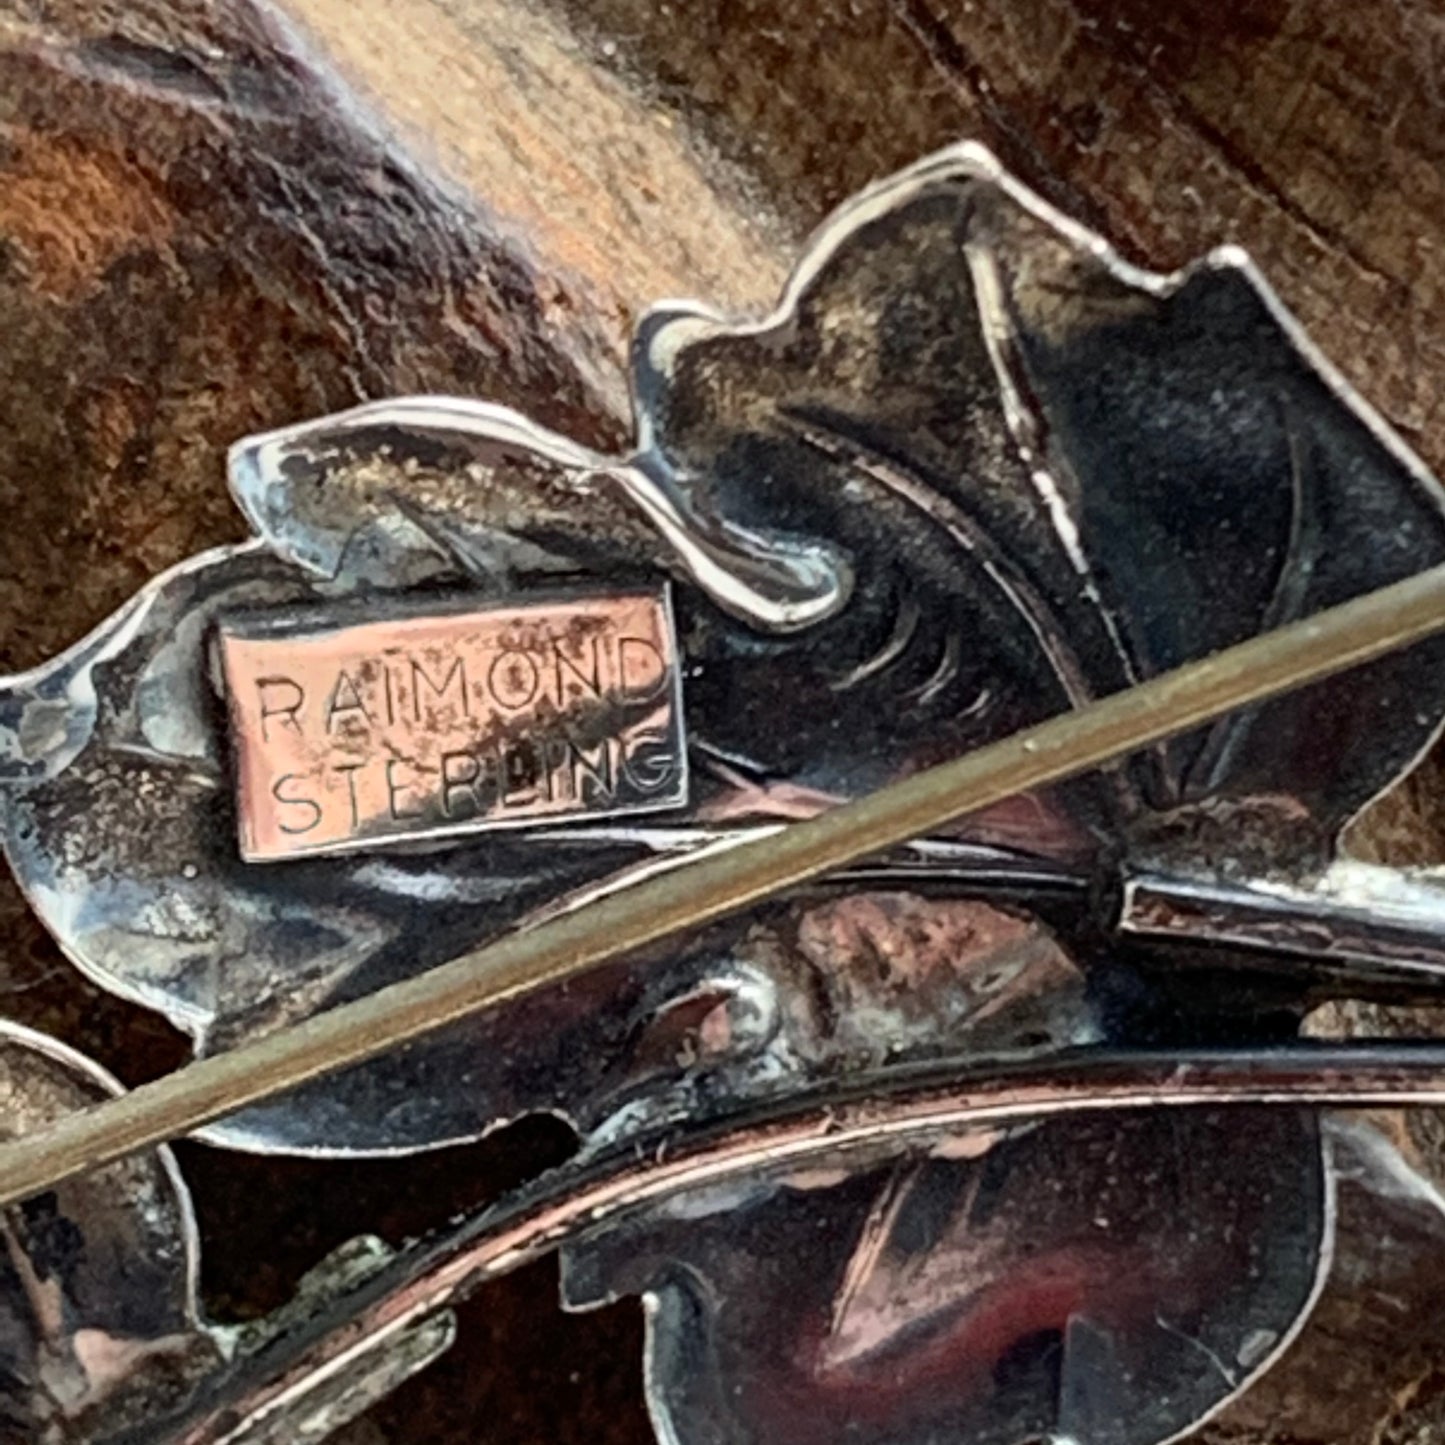 Vintage Raimond Sterling Silver Floating Leaves Pin